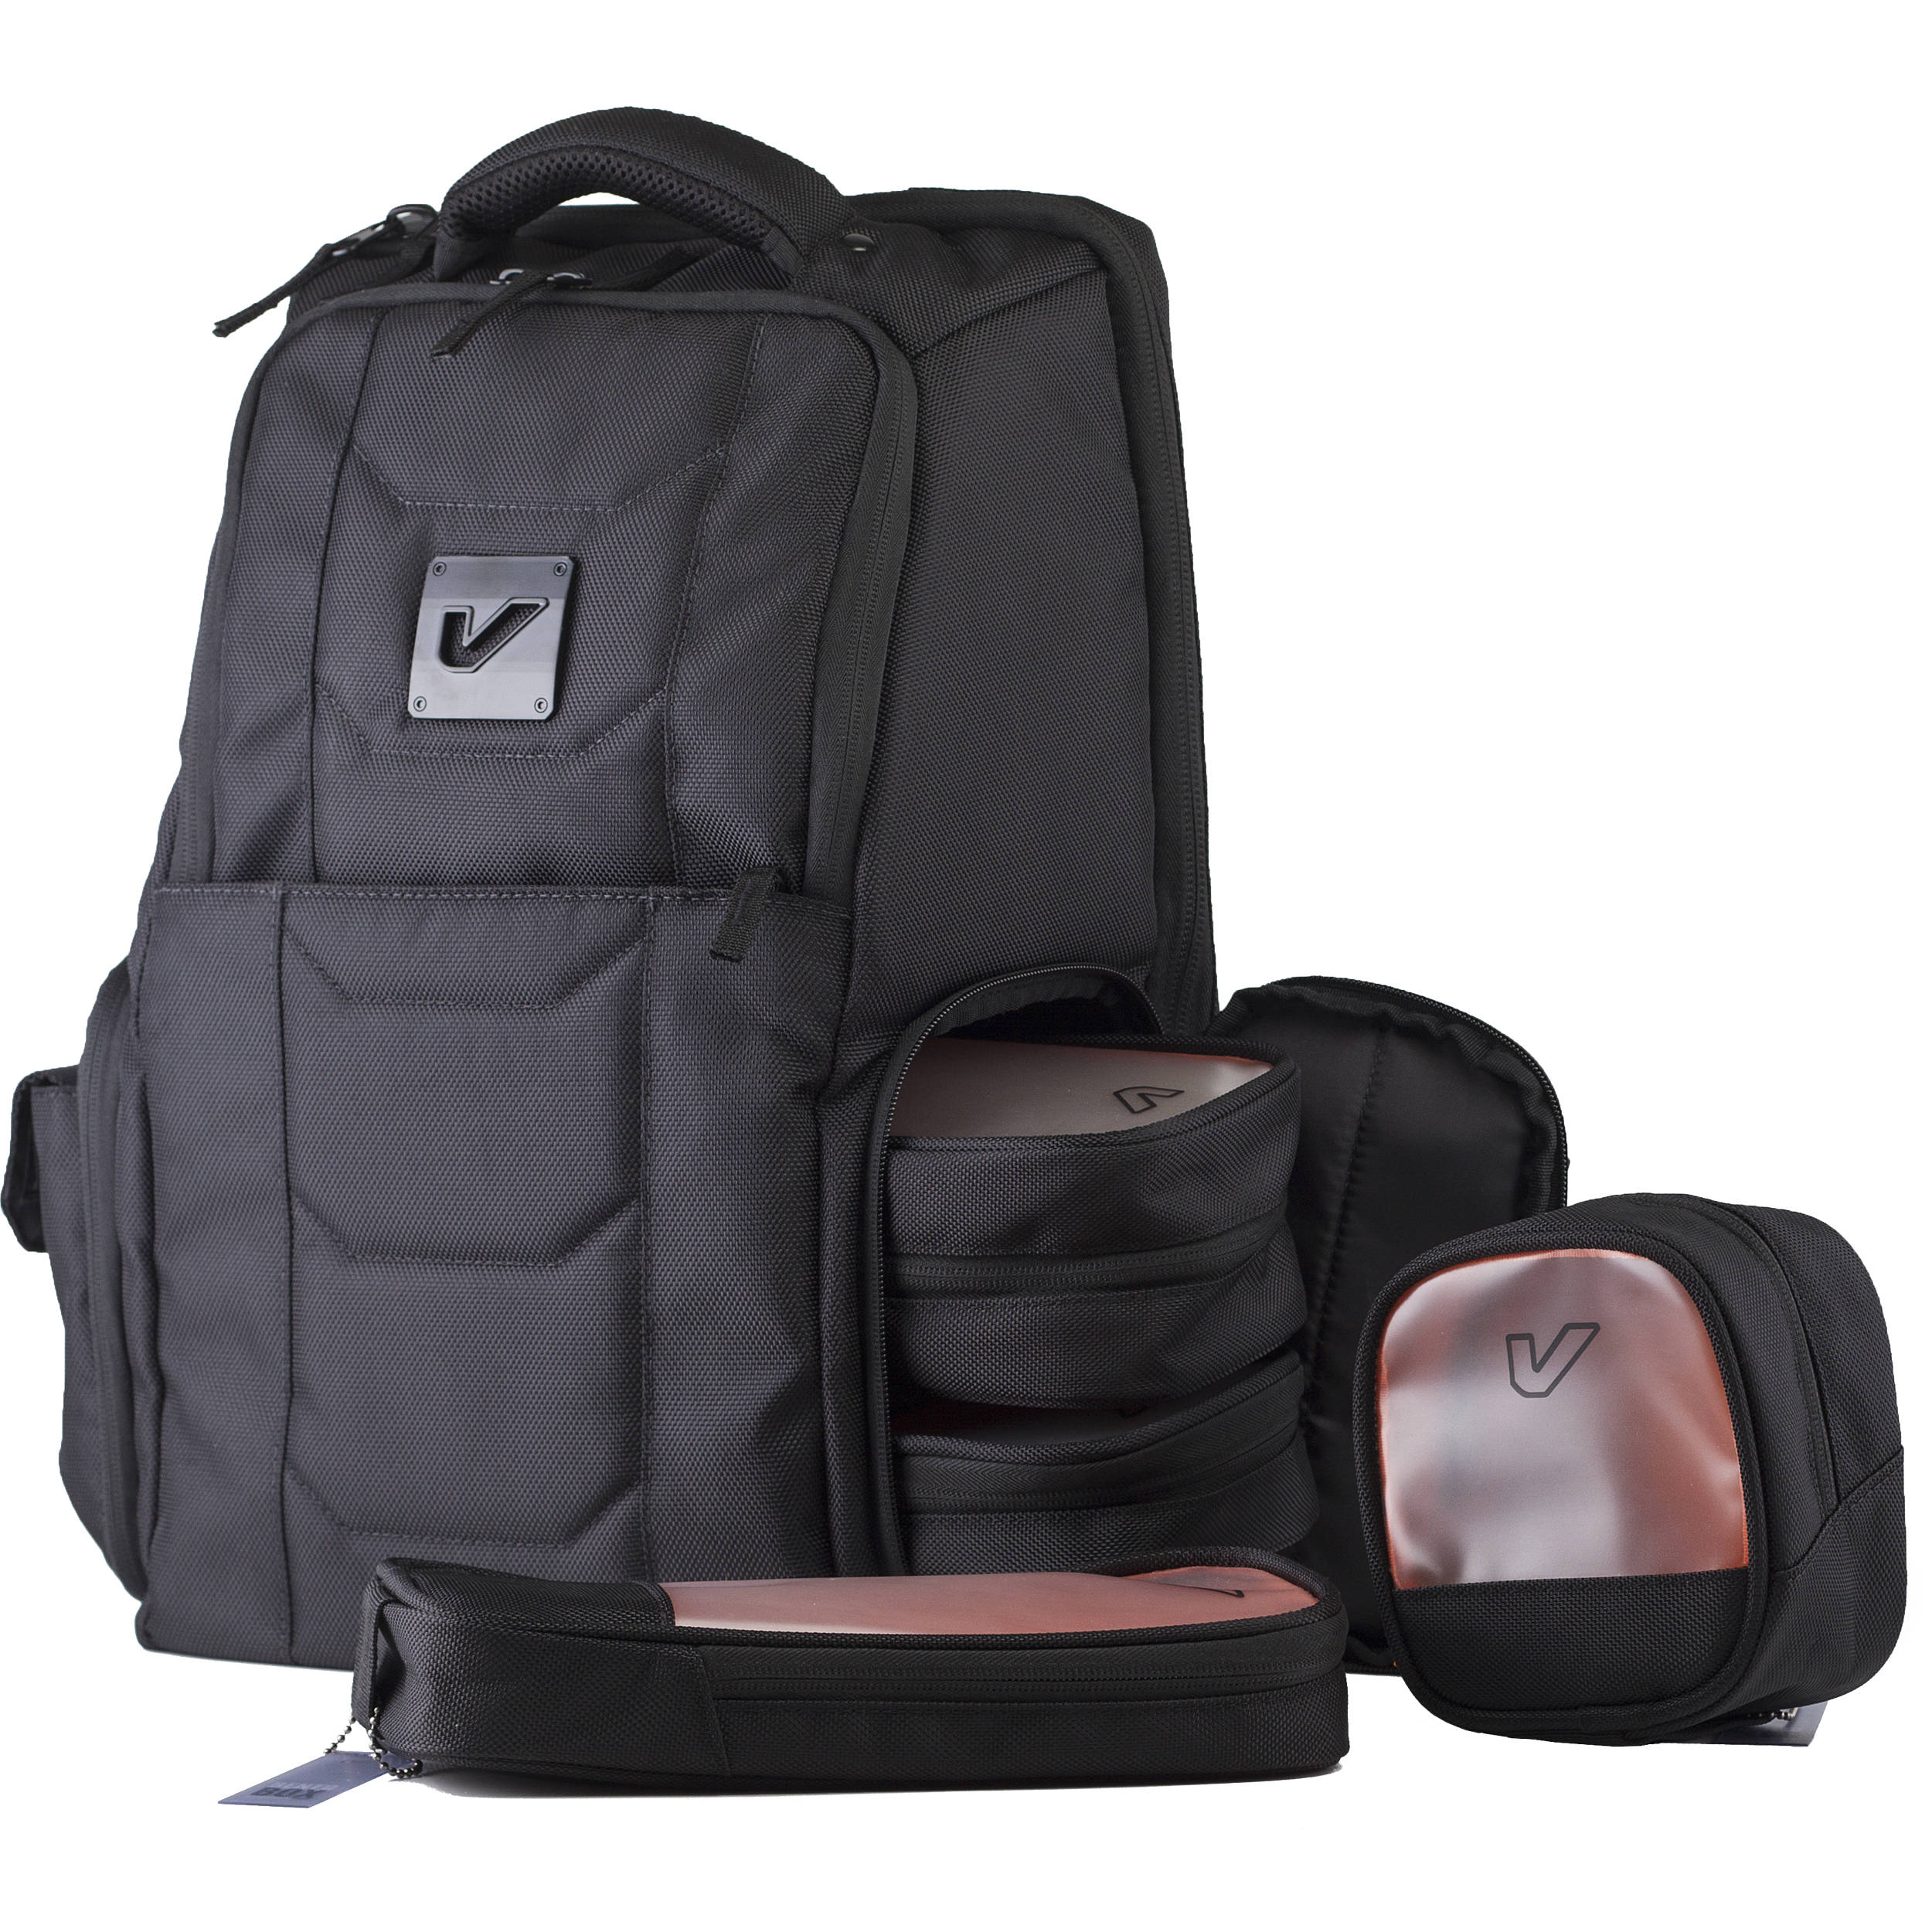 backpacking gear bundle